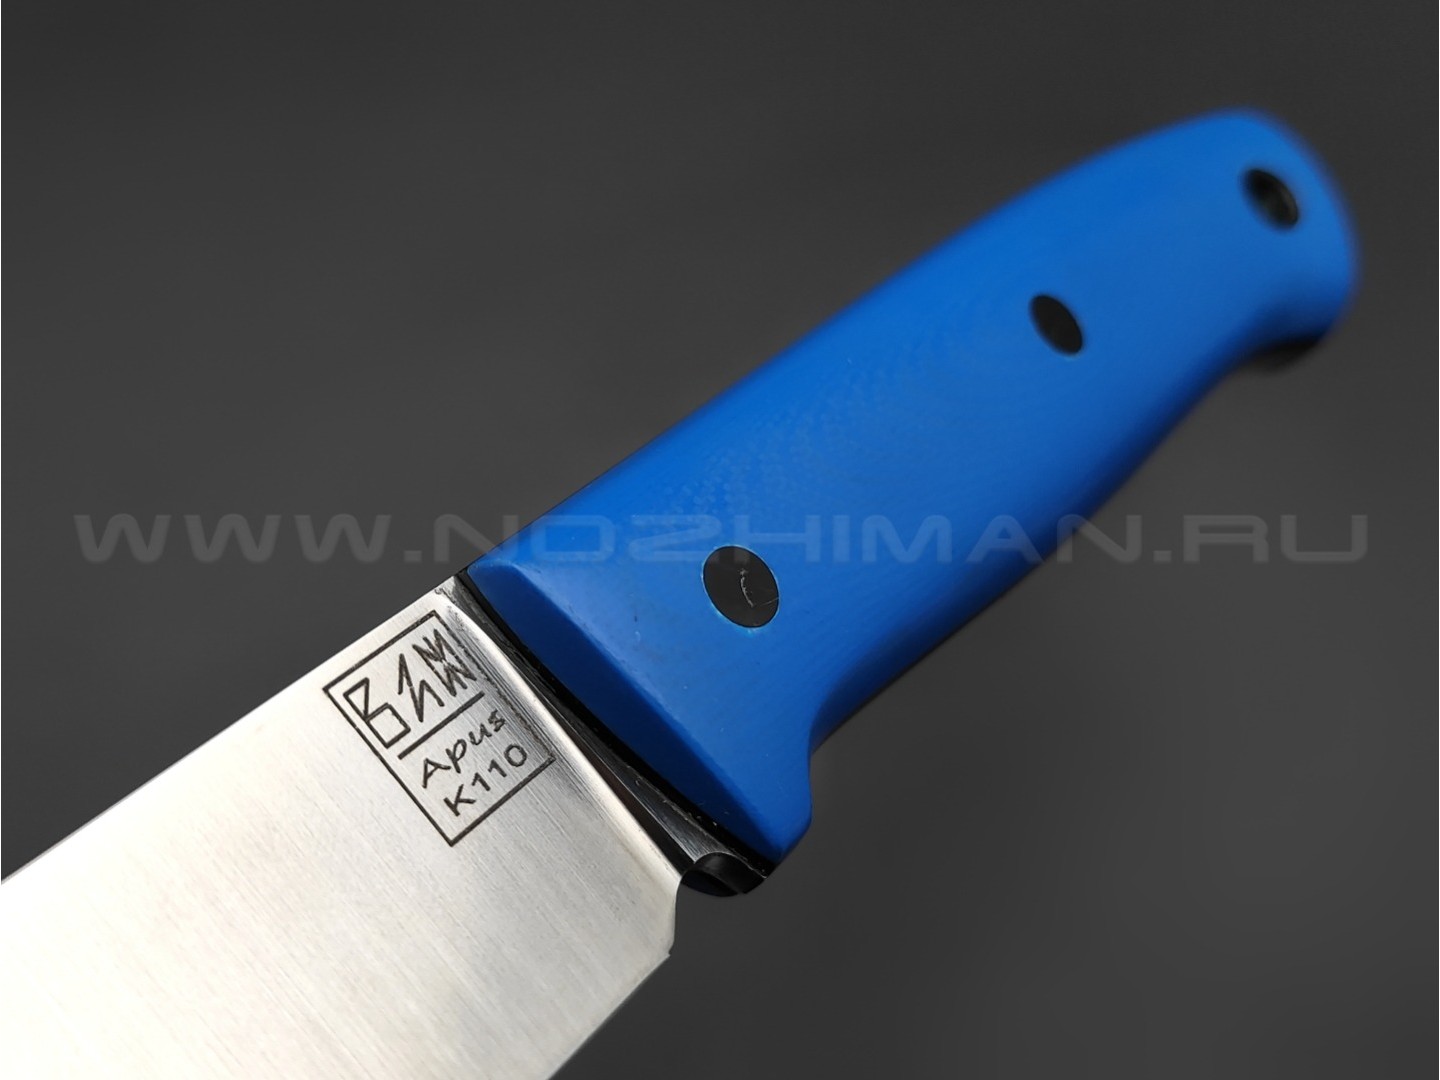 ZH Knives нож Bullet сталь K110 satin, рукоять G10 blue